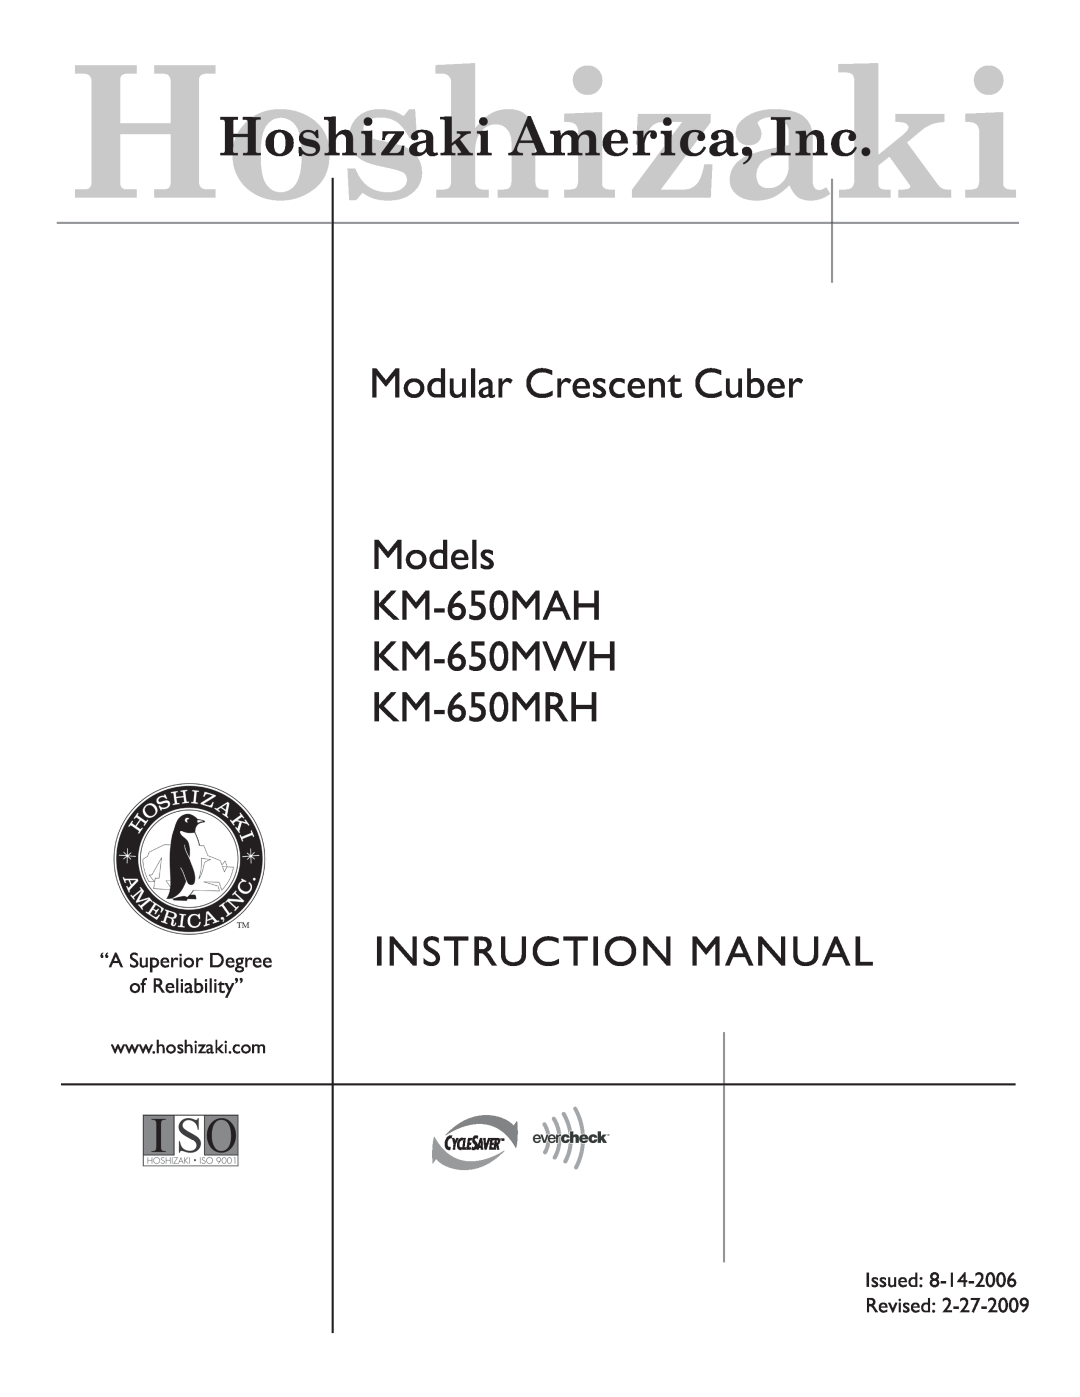 Hoshizaki instruction manual Modular Crescent Cuber Models KM-650MAH KM-650MWH KM-650MRH 